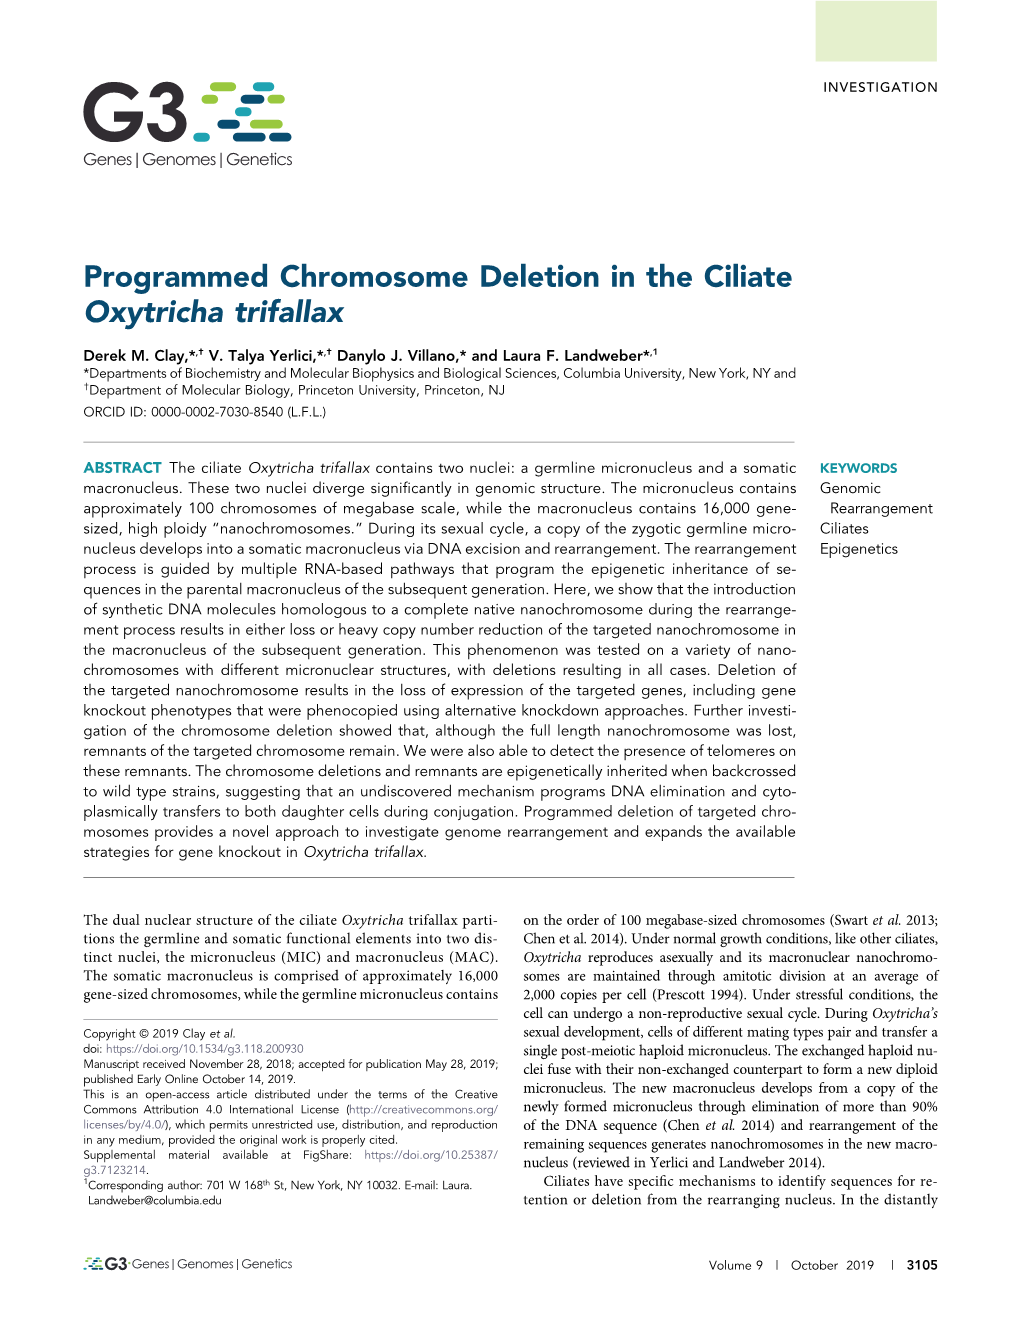 Programmed Chromosome Deletion in the Ciliate Oxytricha Trifallax